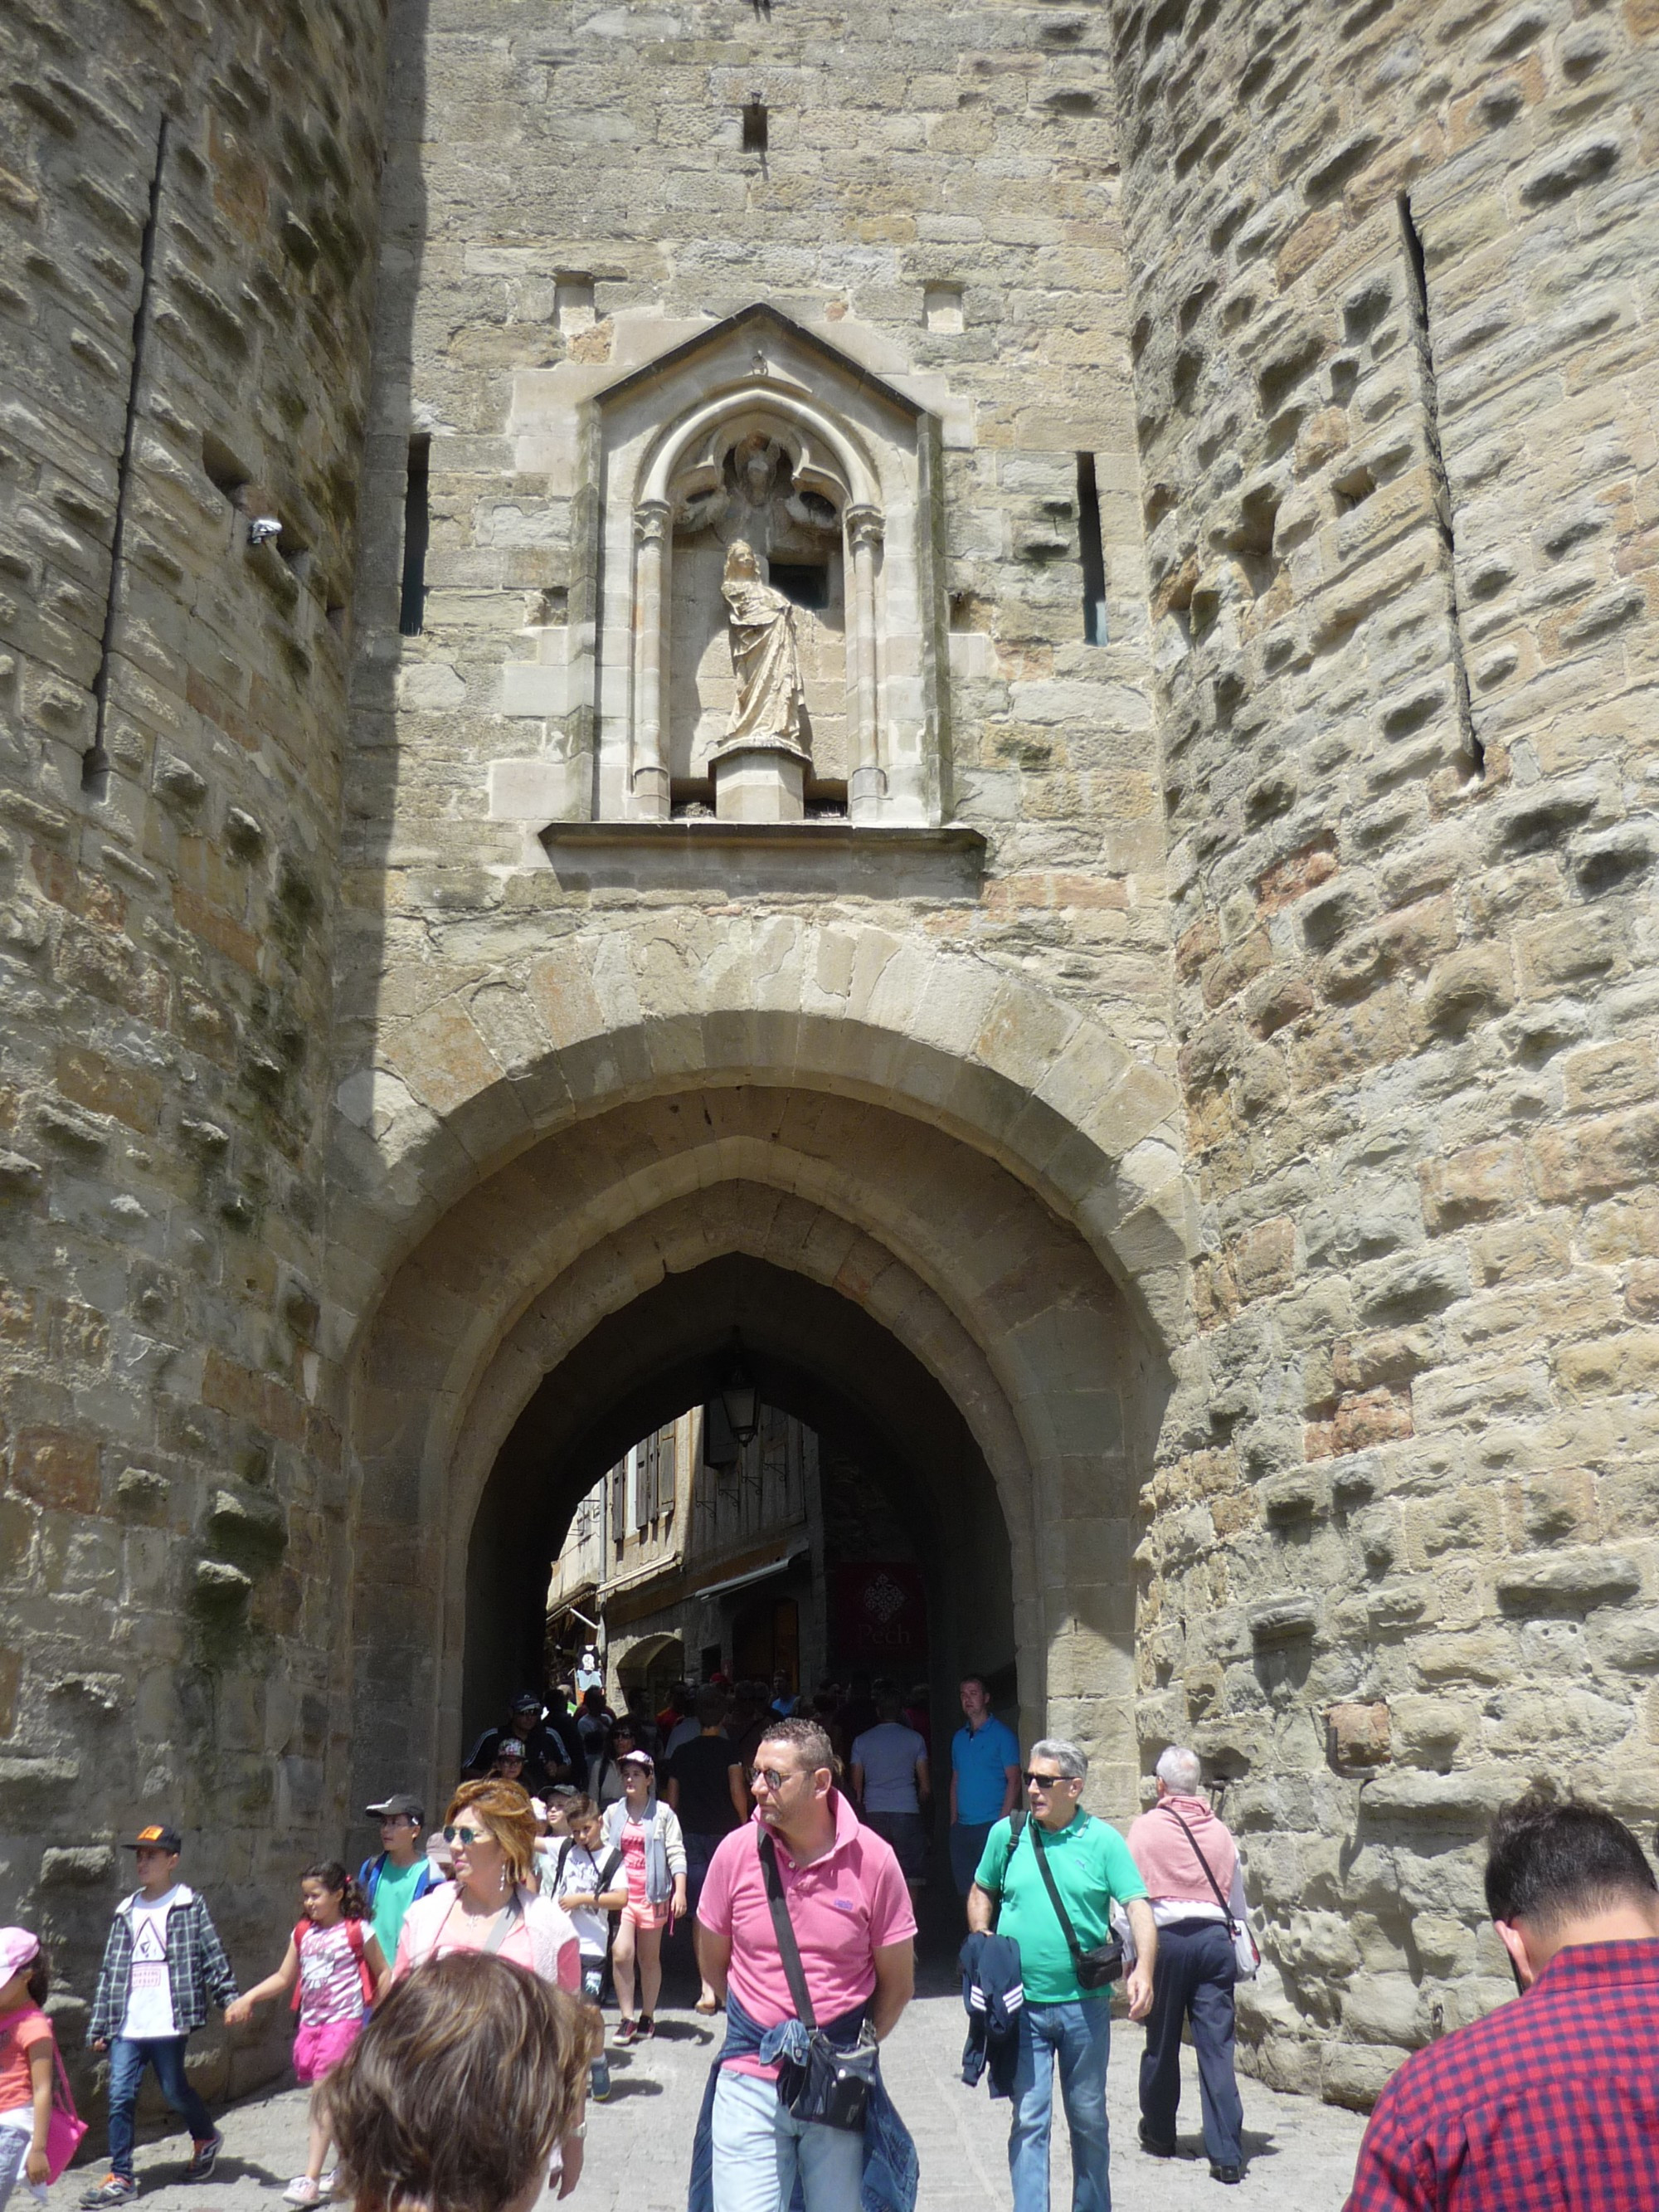 Carcassonne, France